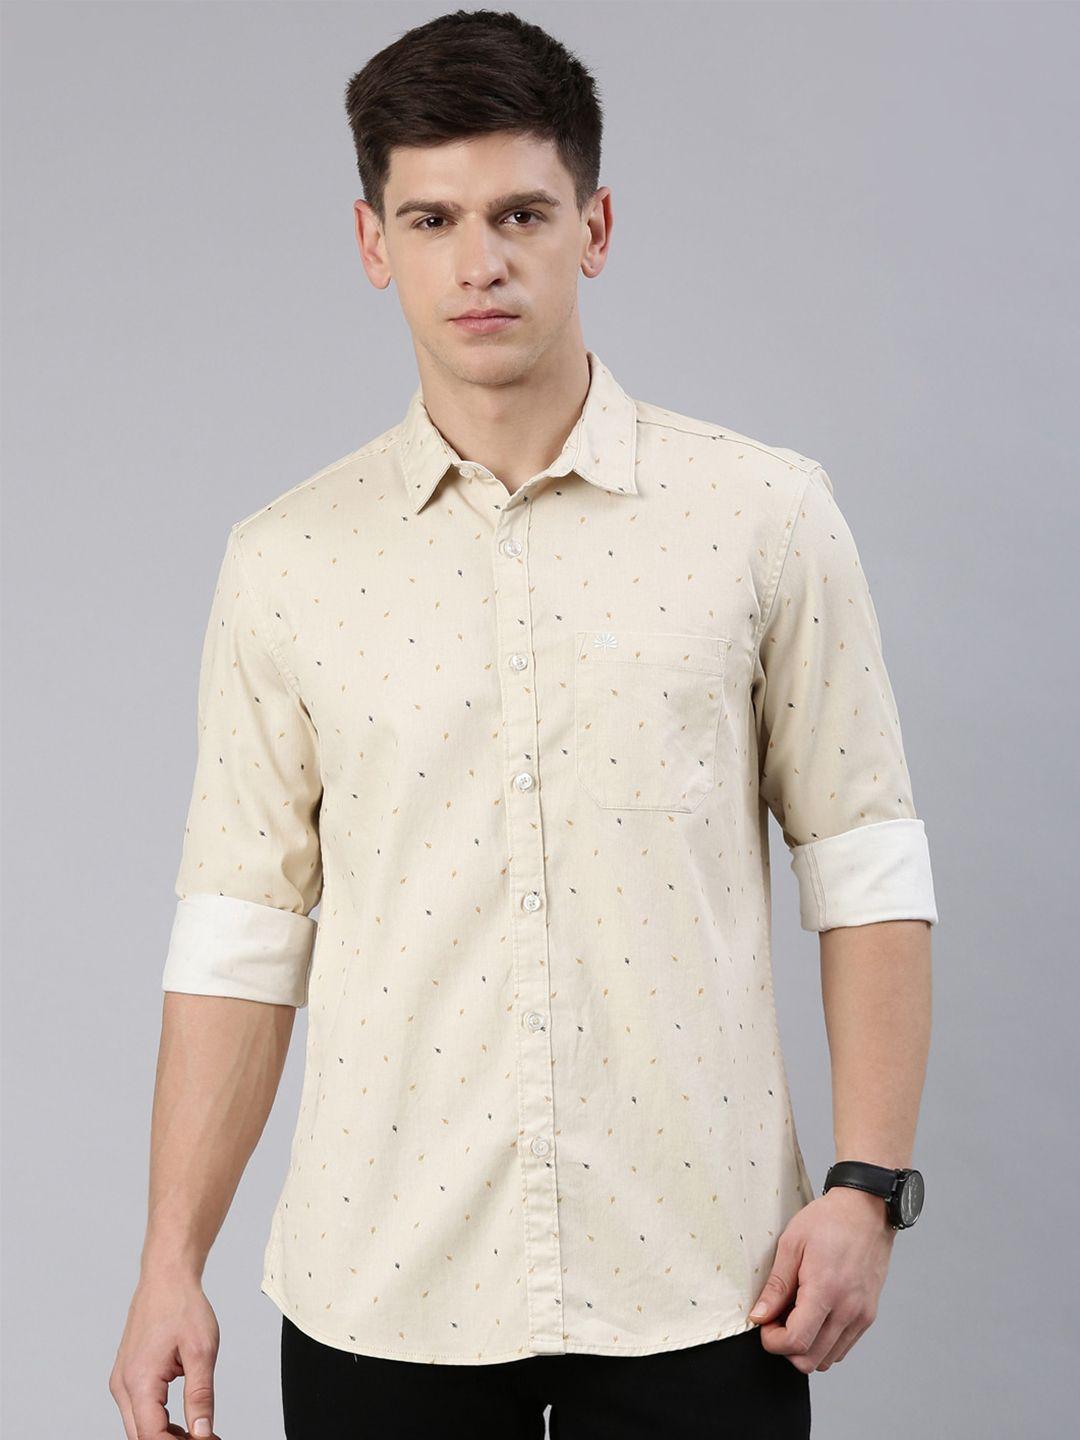 chennis slim fit conversational printed cotton casual shirt